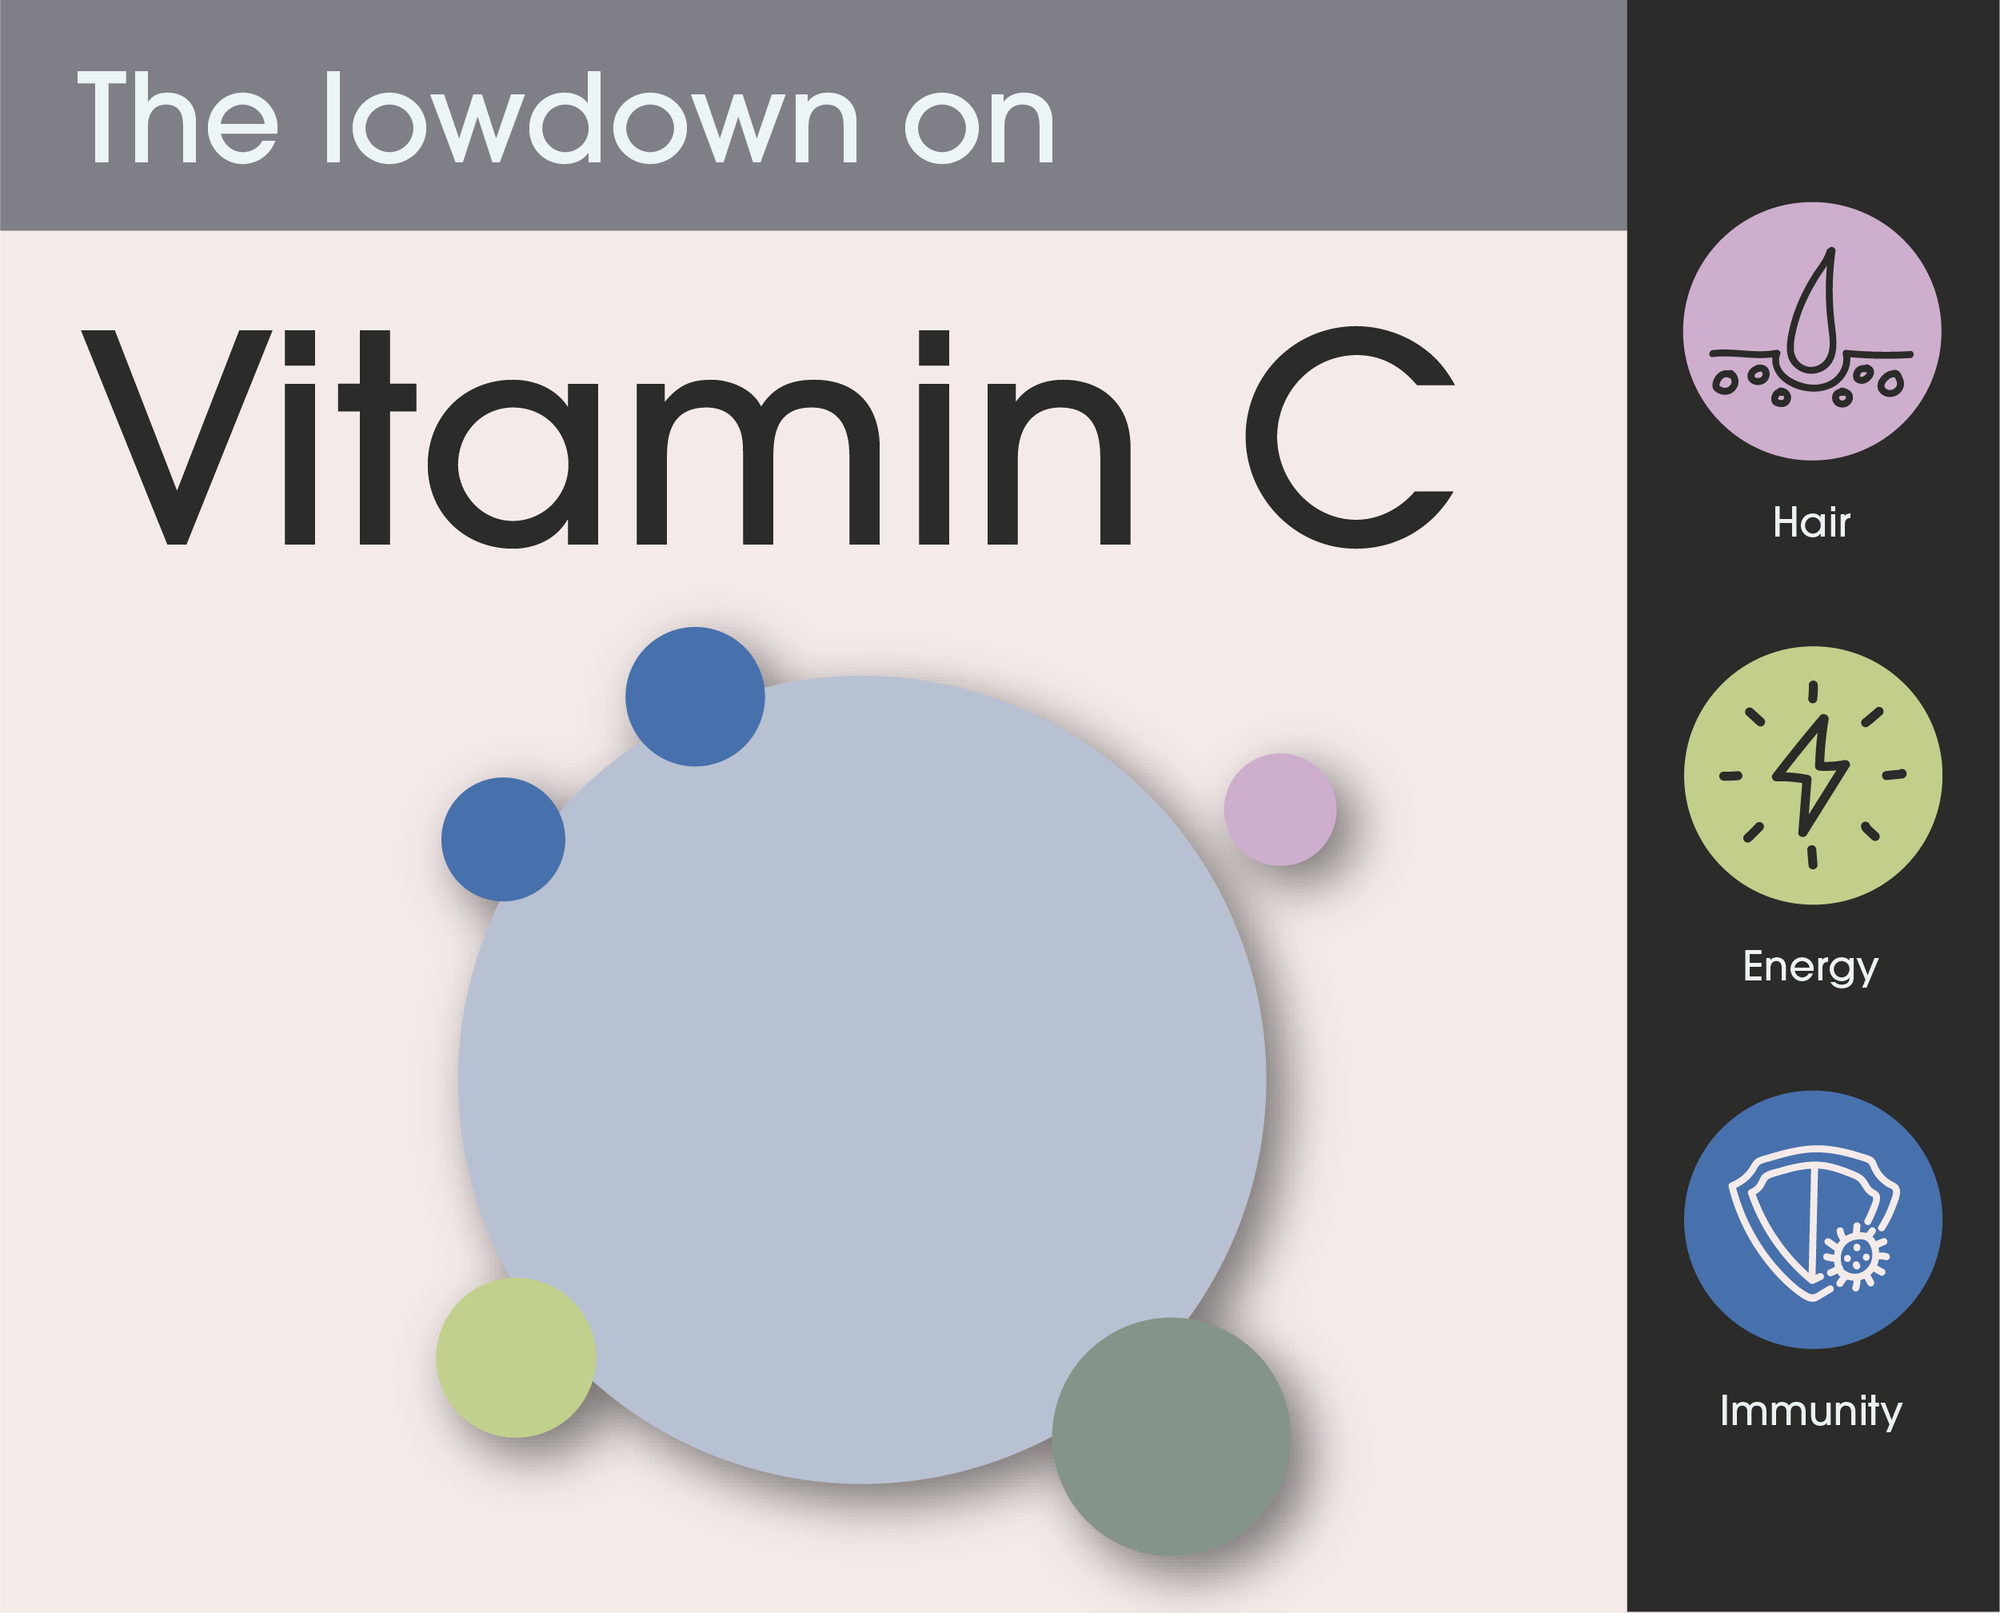 The lowdown on Vitamin C